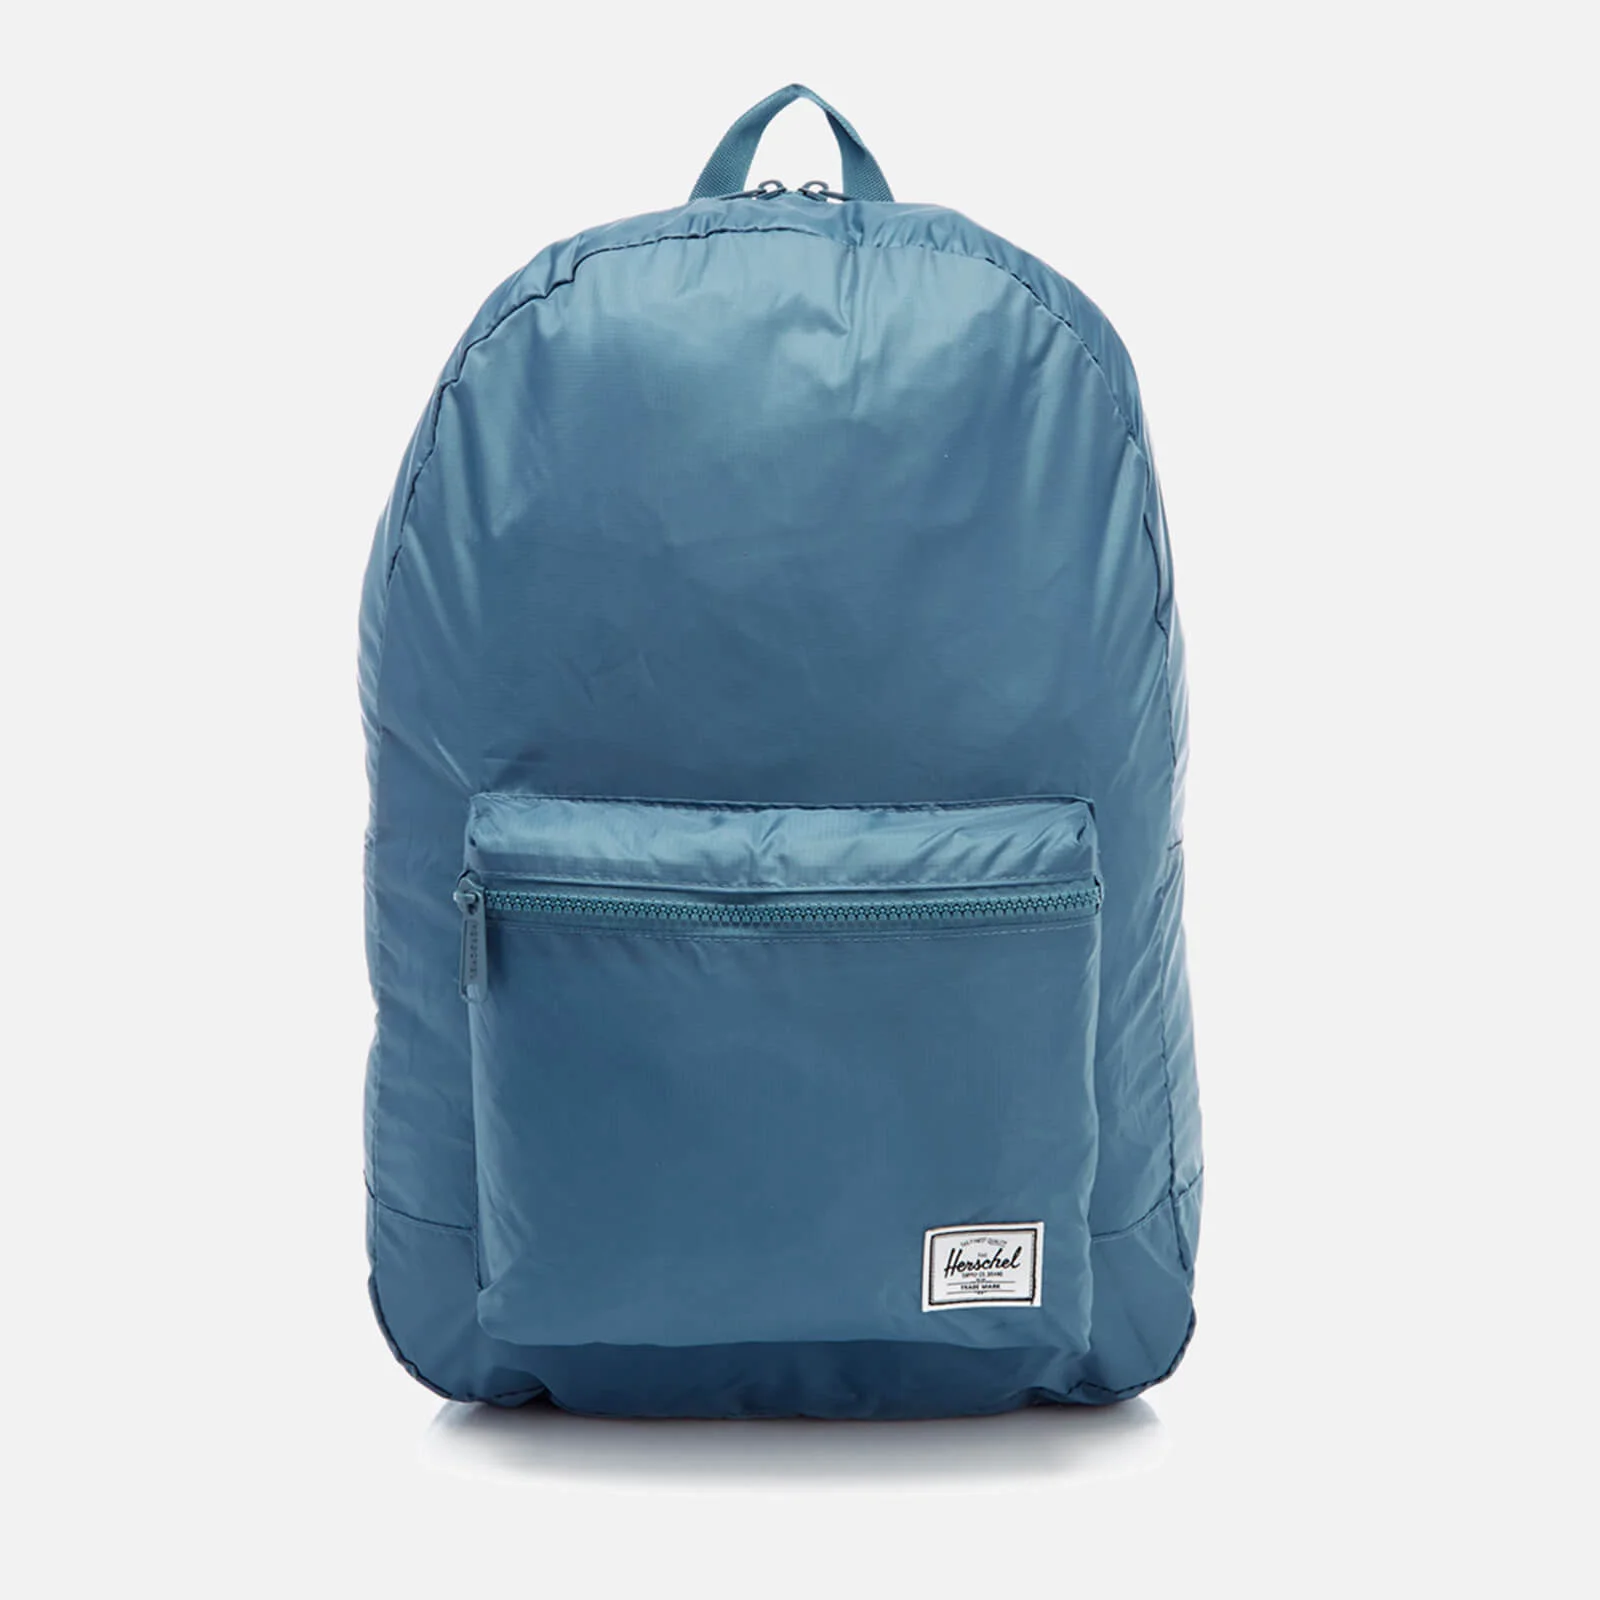 Herschel Supply Co. Packable Daypack Backpack - Stellar Image 1